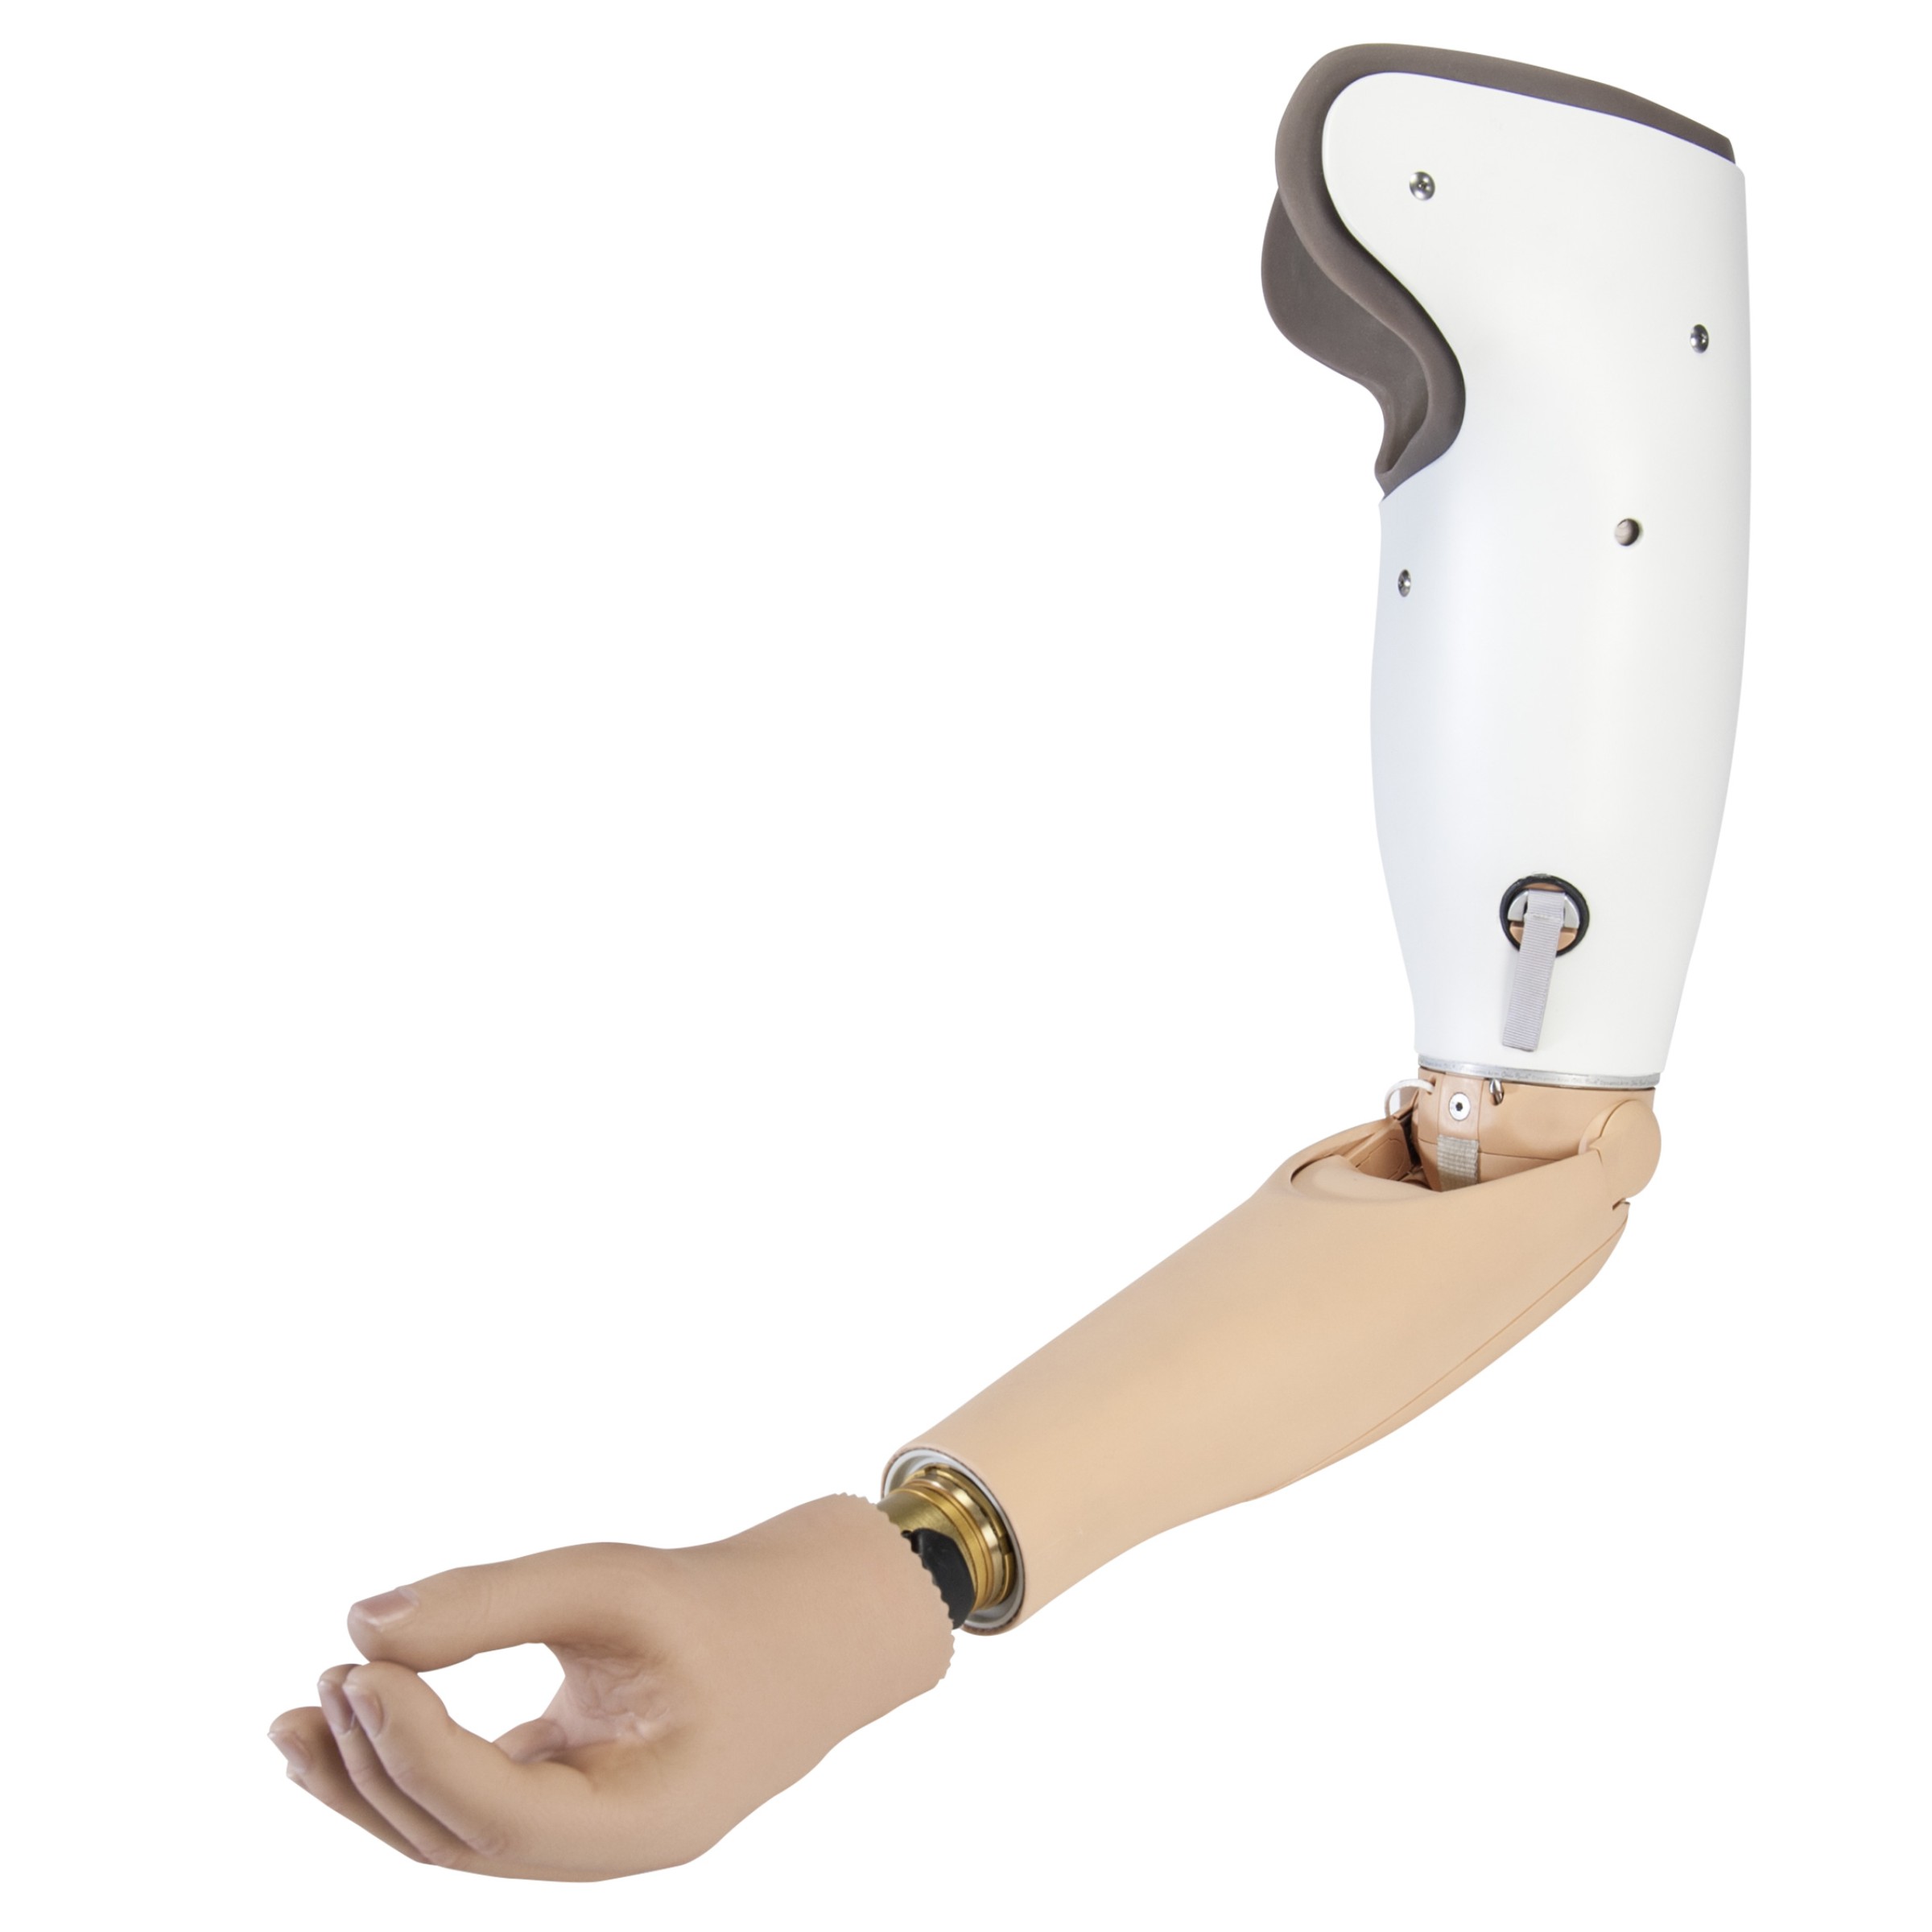 Image result for prosthetics spots